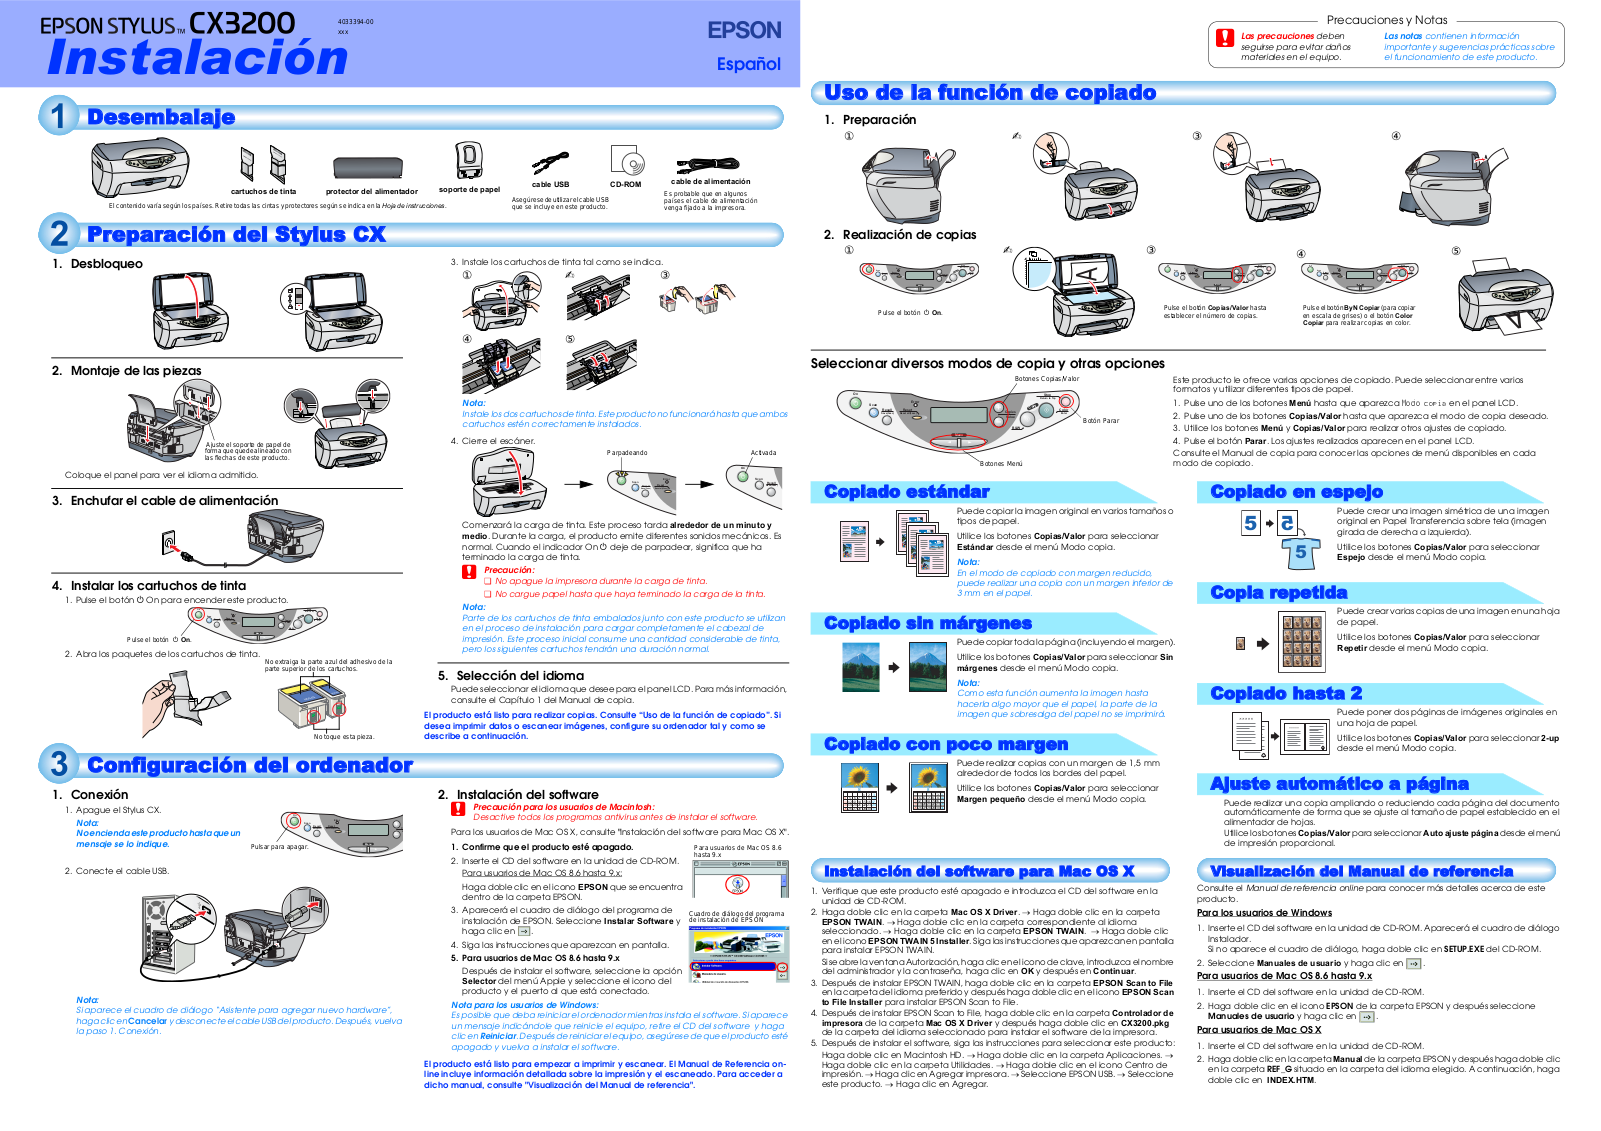 Epson STYLUS CX3200 Installation Manual